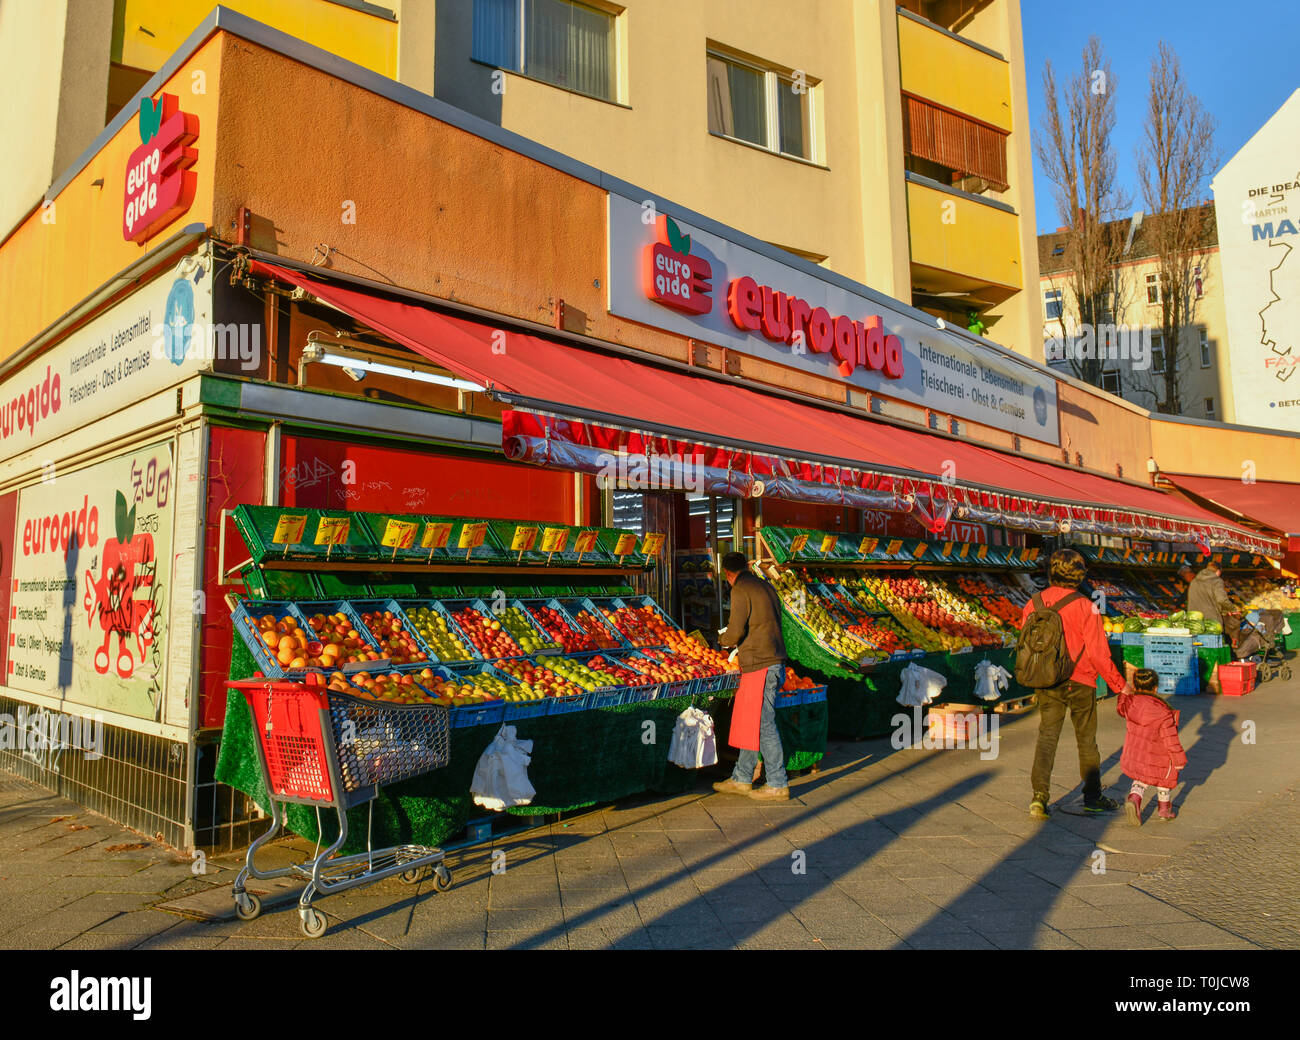 Turkish food market of Eurogida federal avenue, beauty's mountain, Berlin, Germany, Türkischer Lebensmittelmarkt Eurogida Bundesallee, Schöneberg, Deu Stock Photo